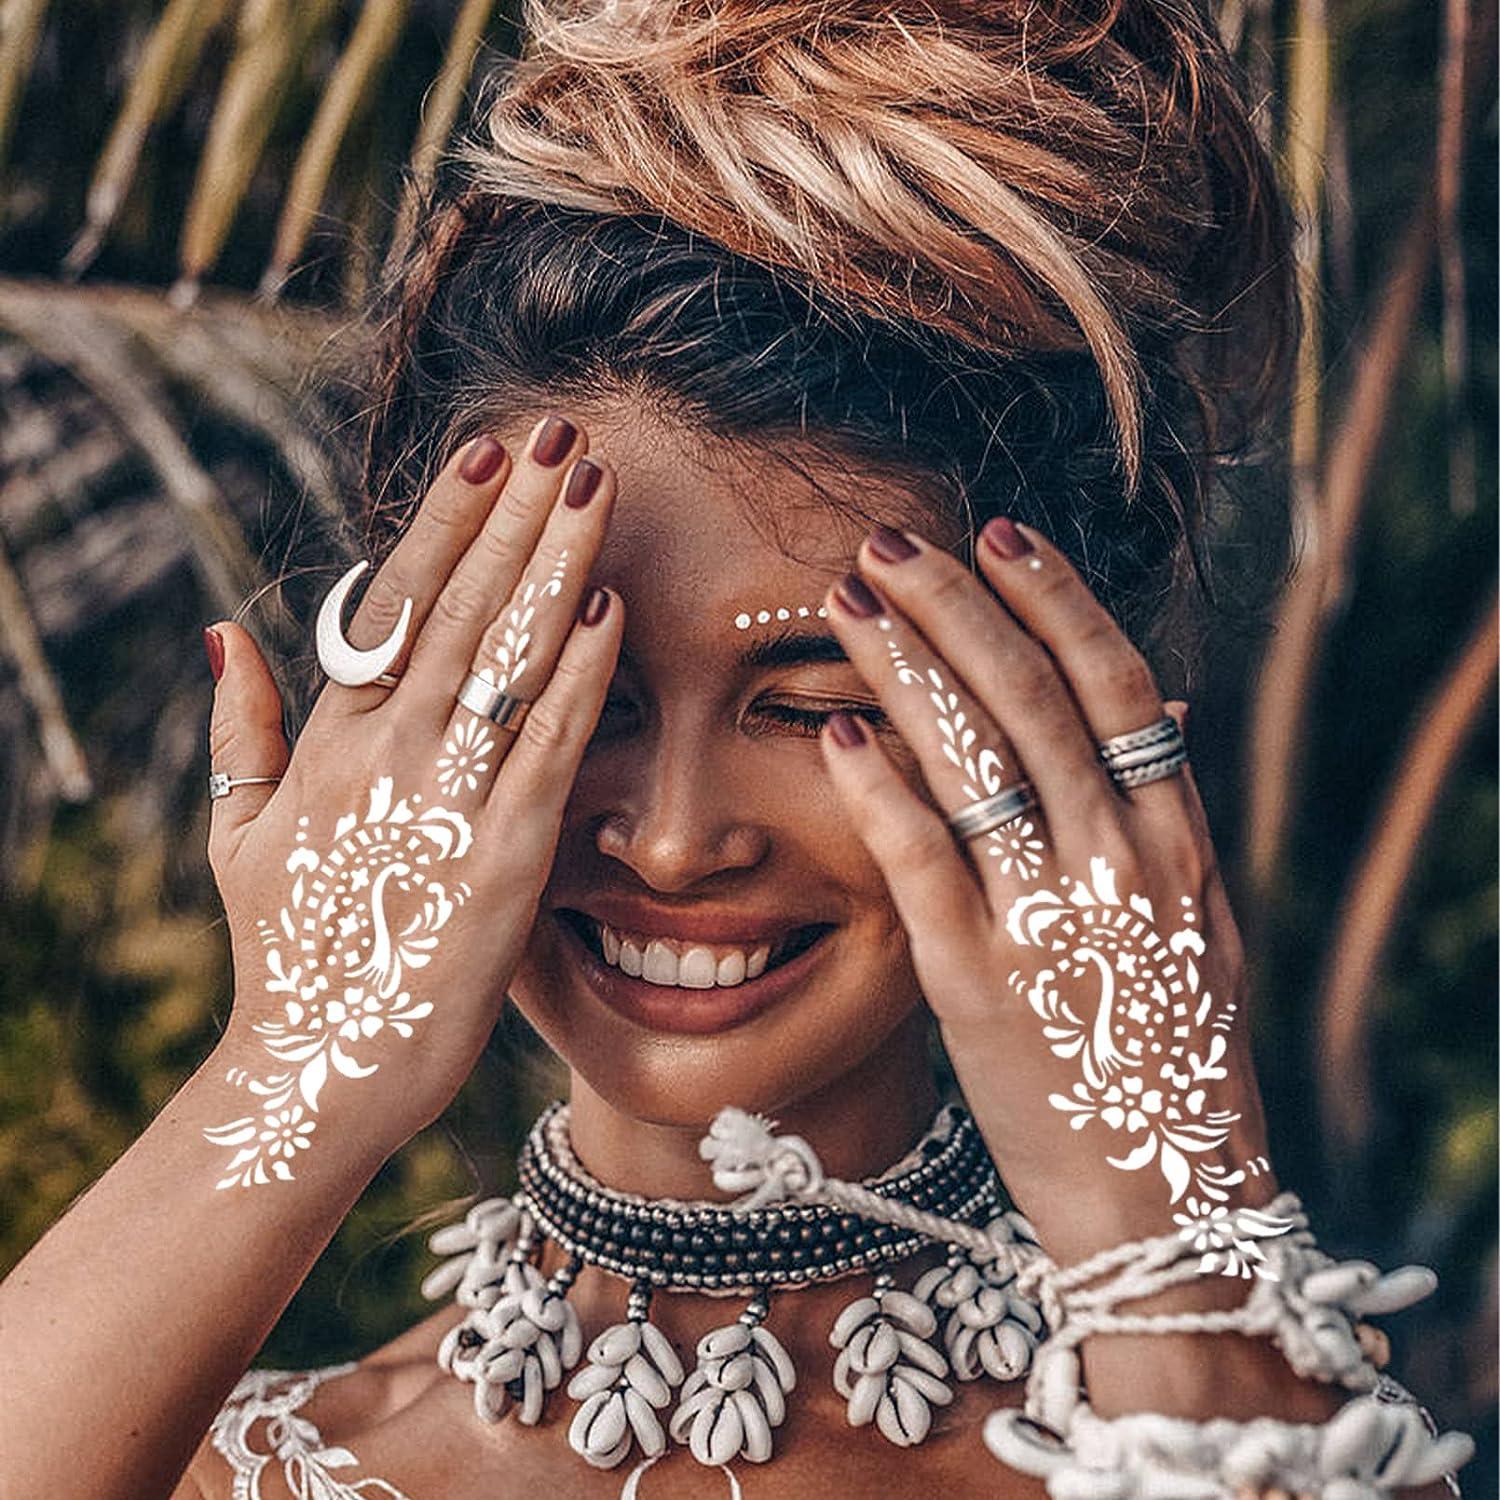 Henna Tattoo Stencil Reusable Temporary Indian Arabian Glitter